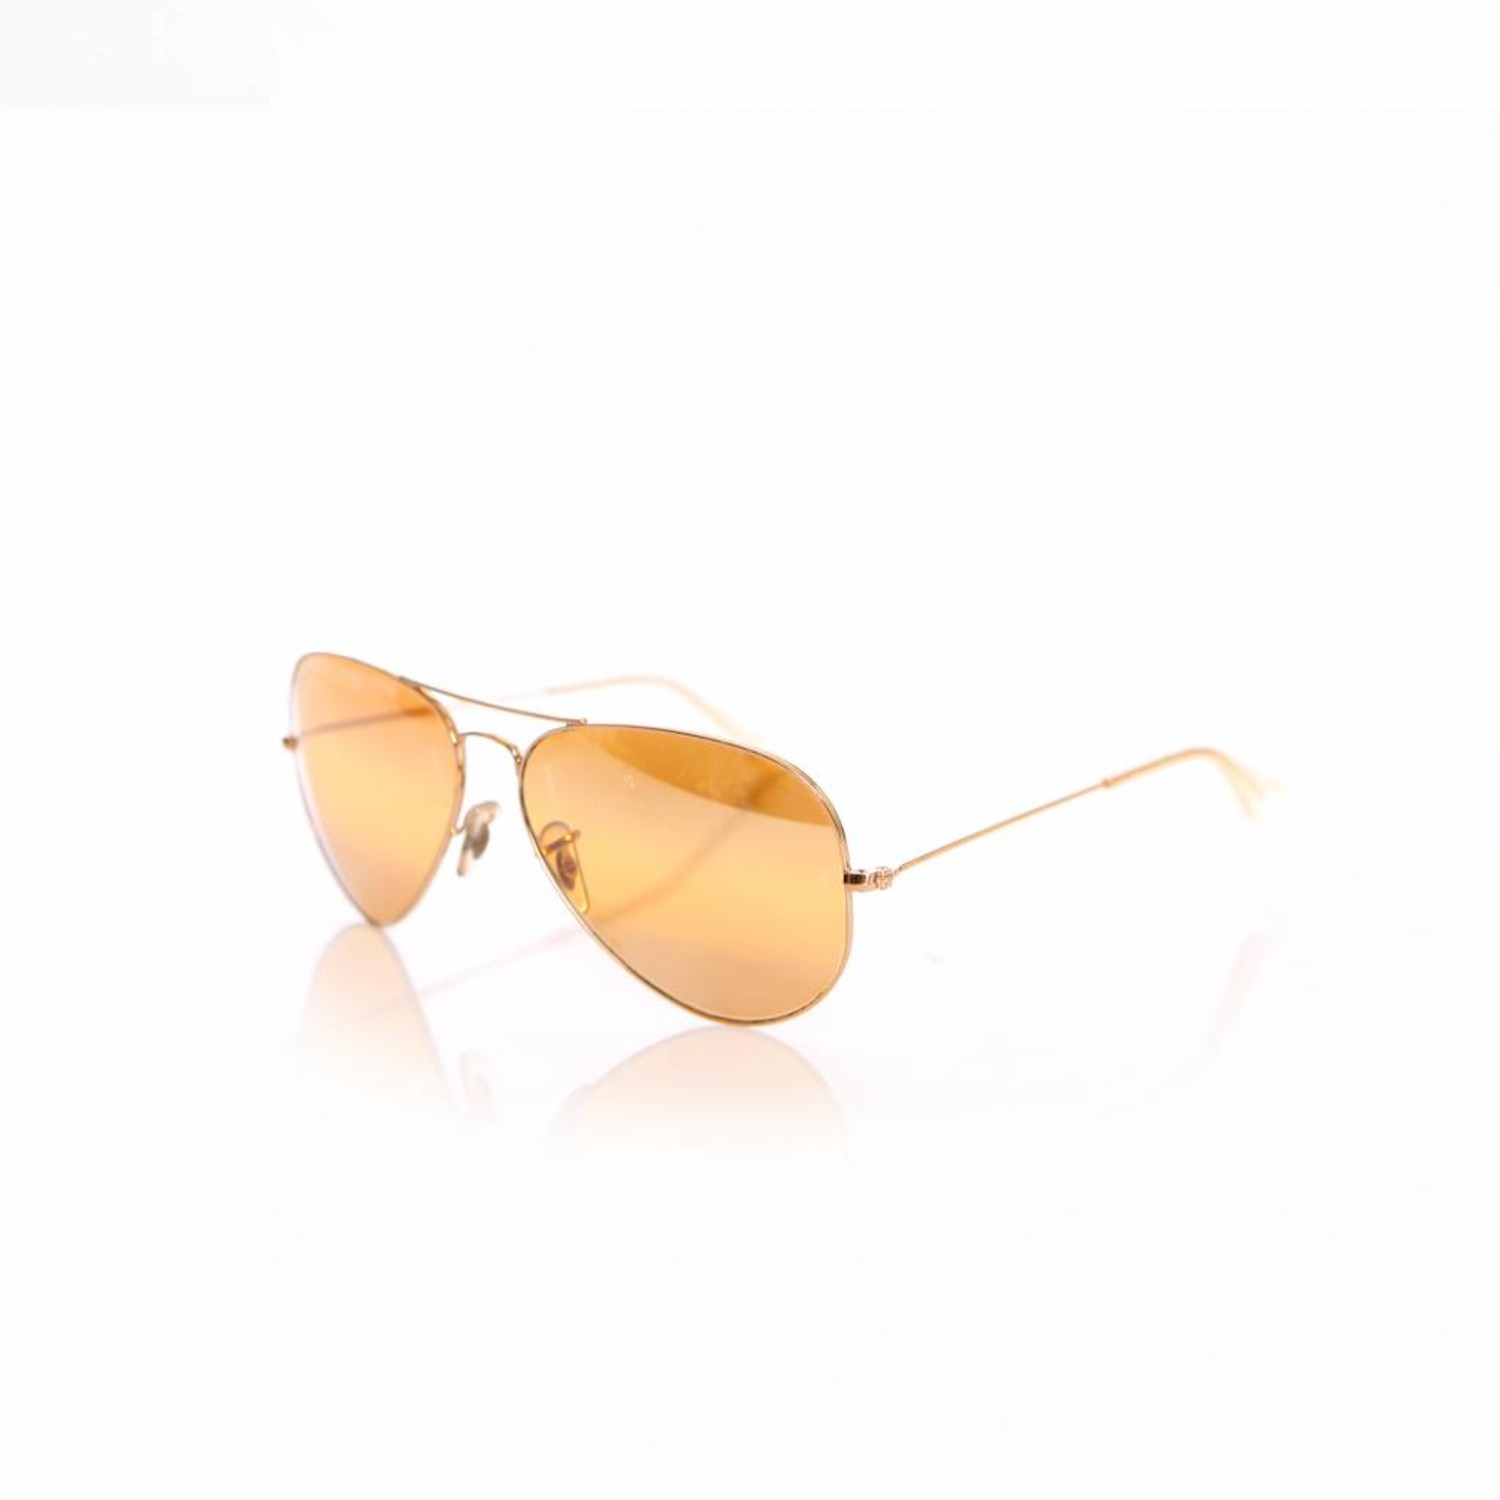 Ray Ban, Gold coloured Aviator glasses 